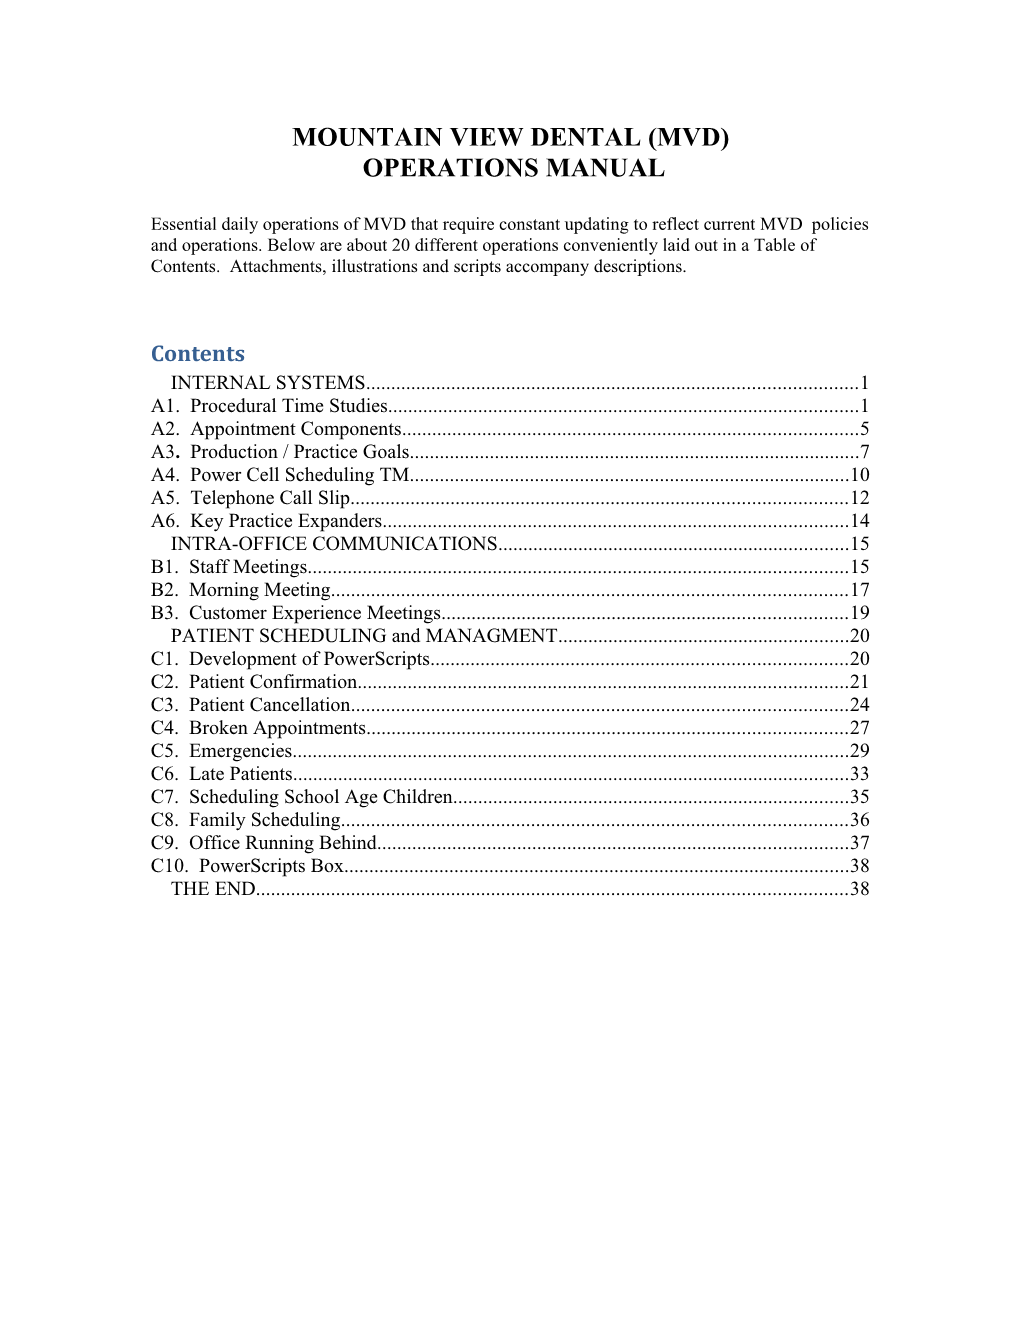 Mountain View Dental (Mvd) Operations Manual